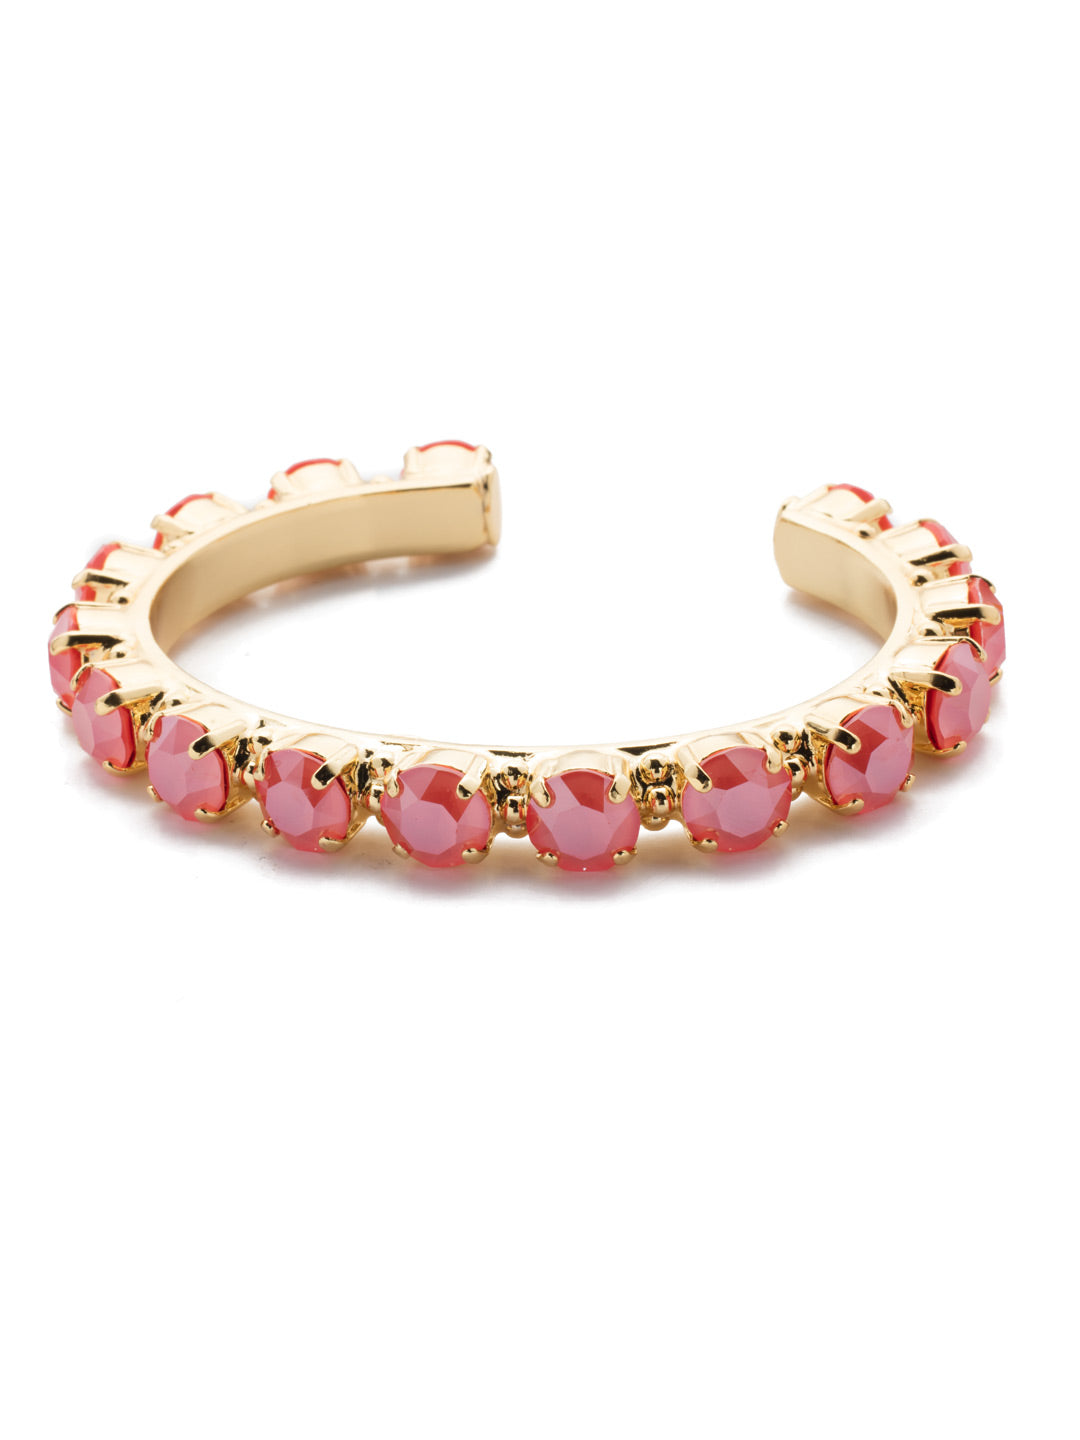 Product Image: Riveting Romance Cuff Bracelet